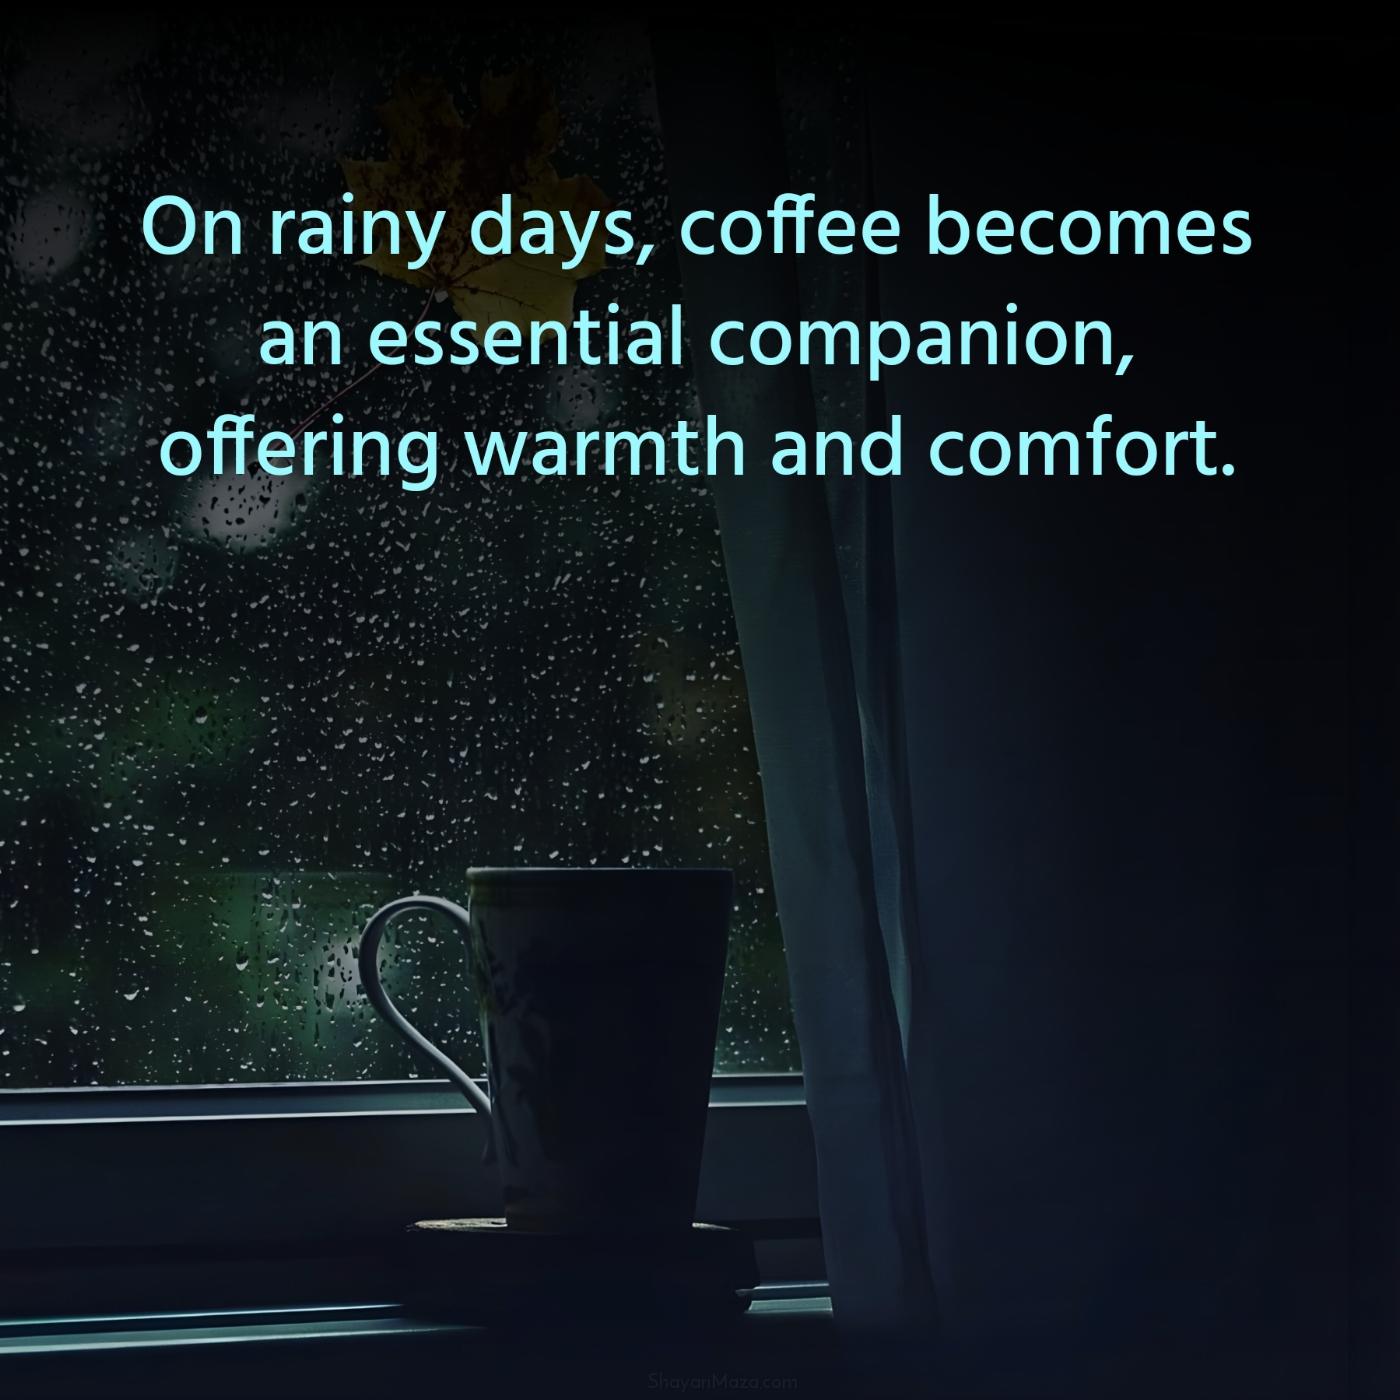 On rainy days coffee becomes an essential companion